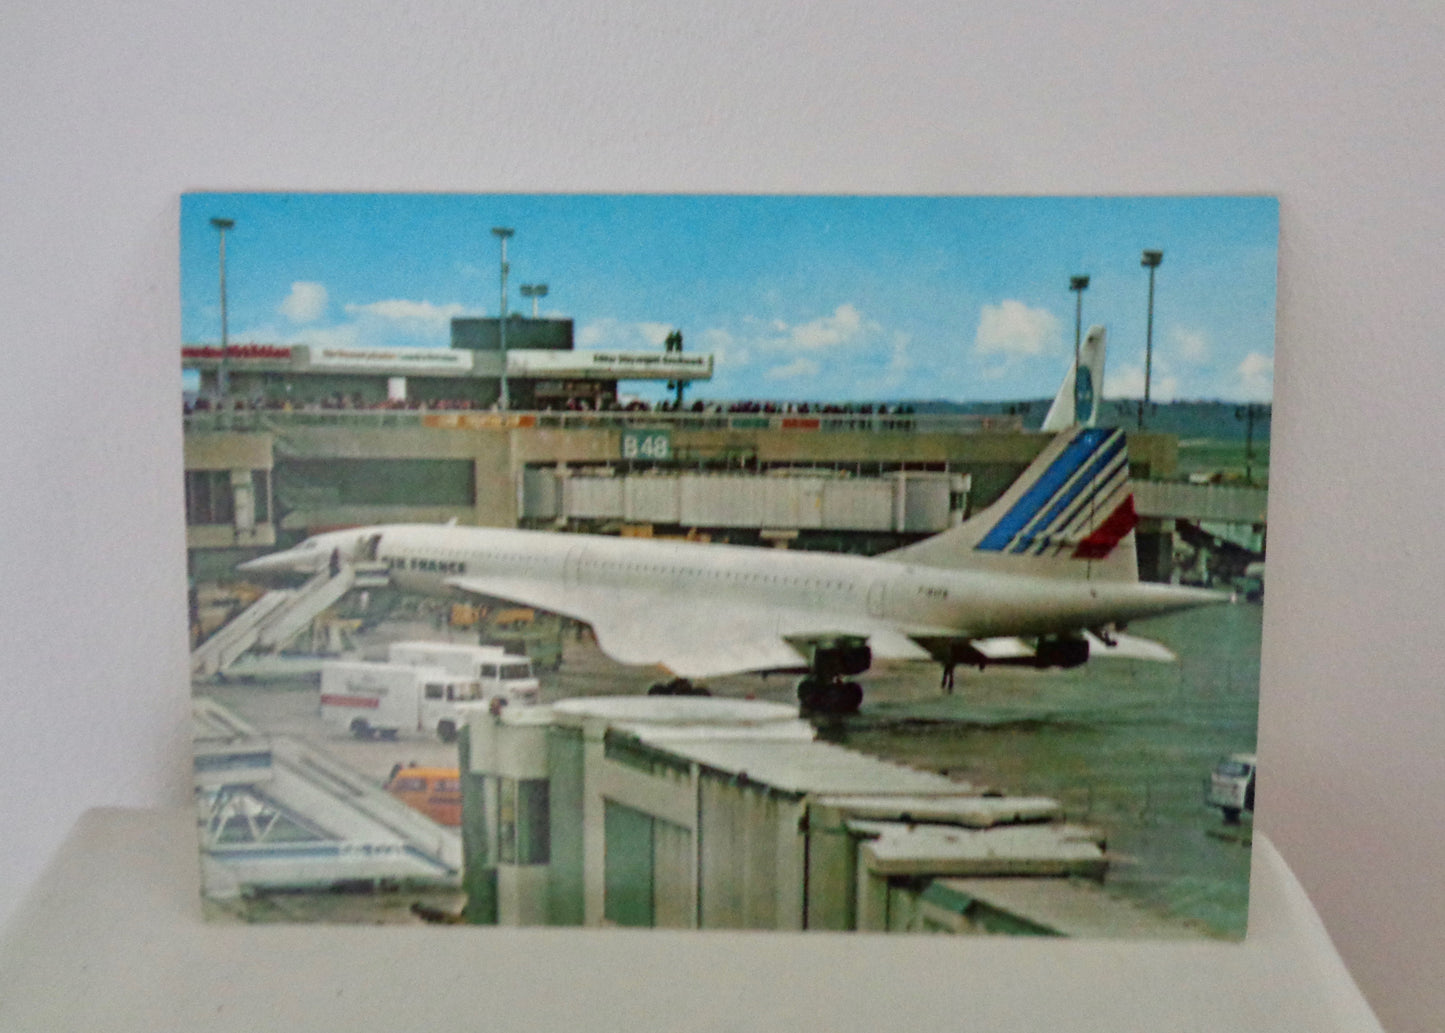 Vintage Concorde Postcard Featuring Concorde at Frankfurt Main Airport by Michel & co